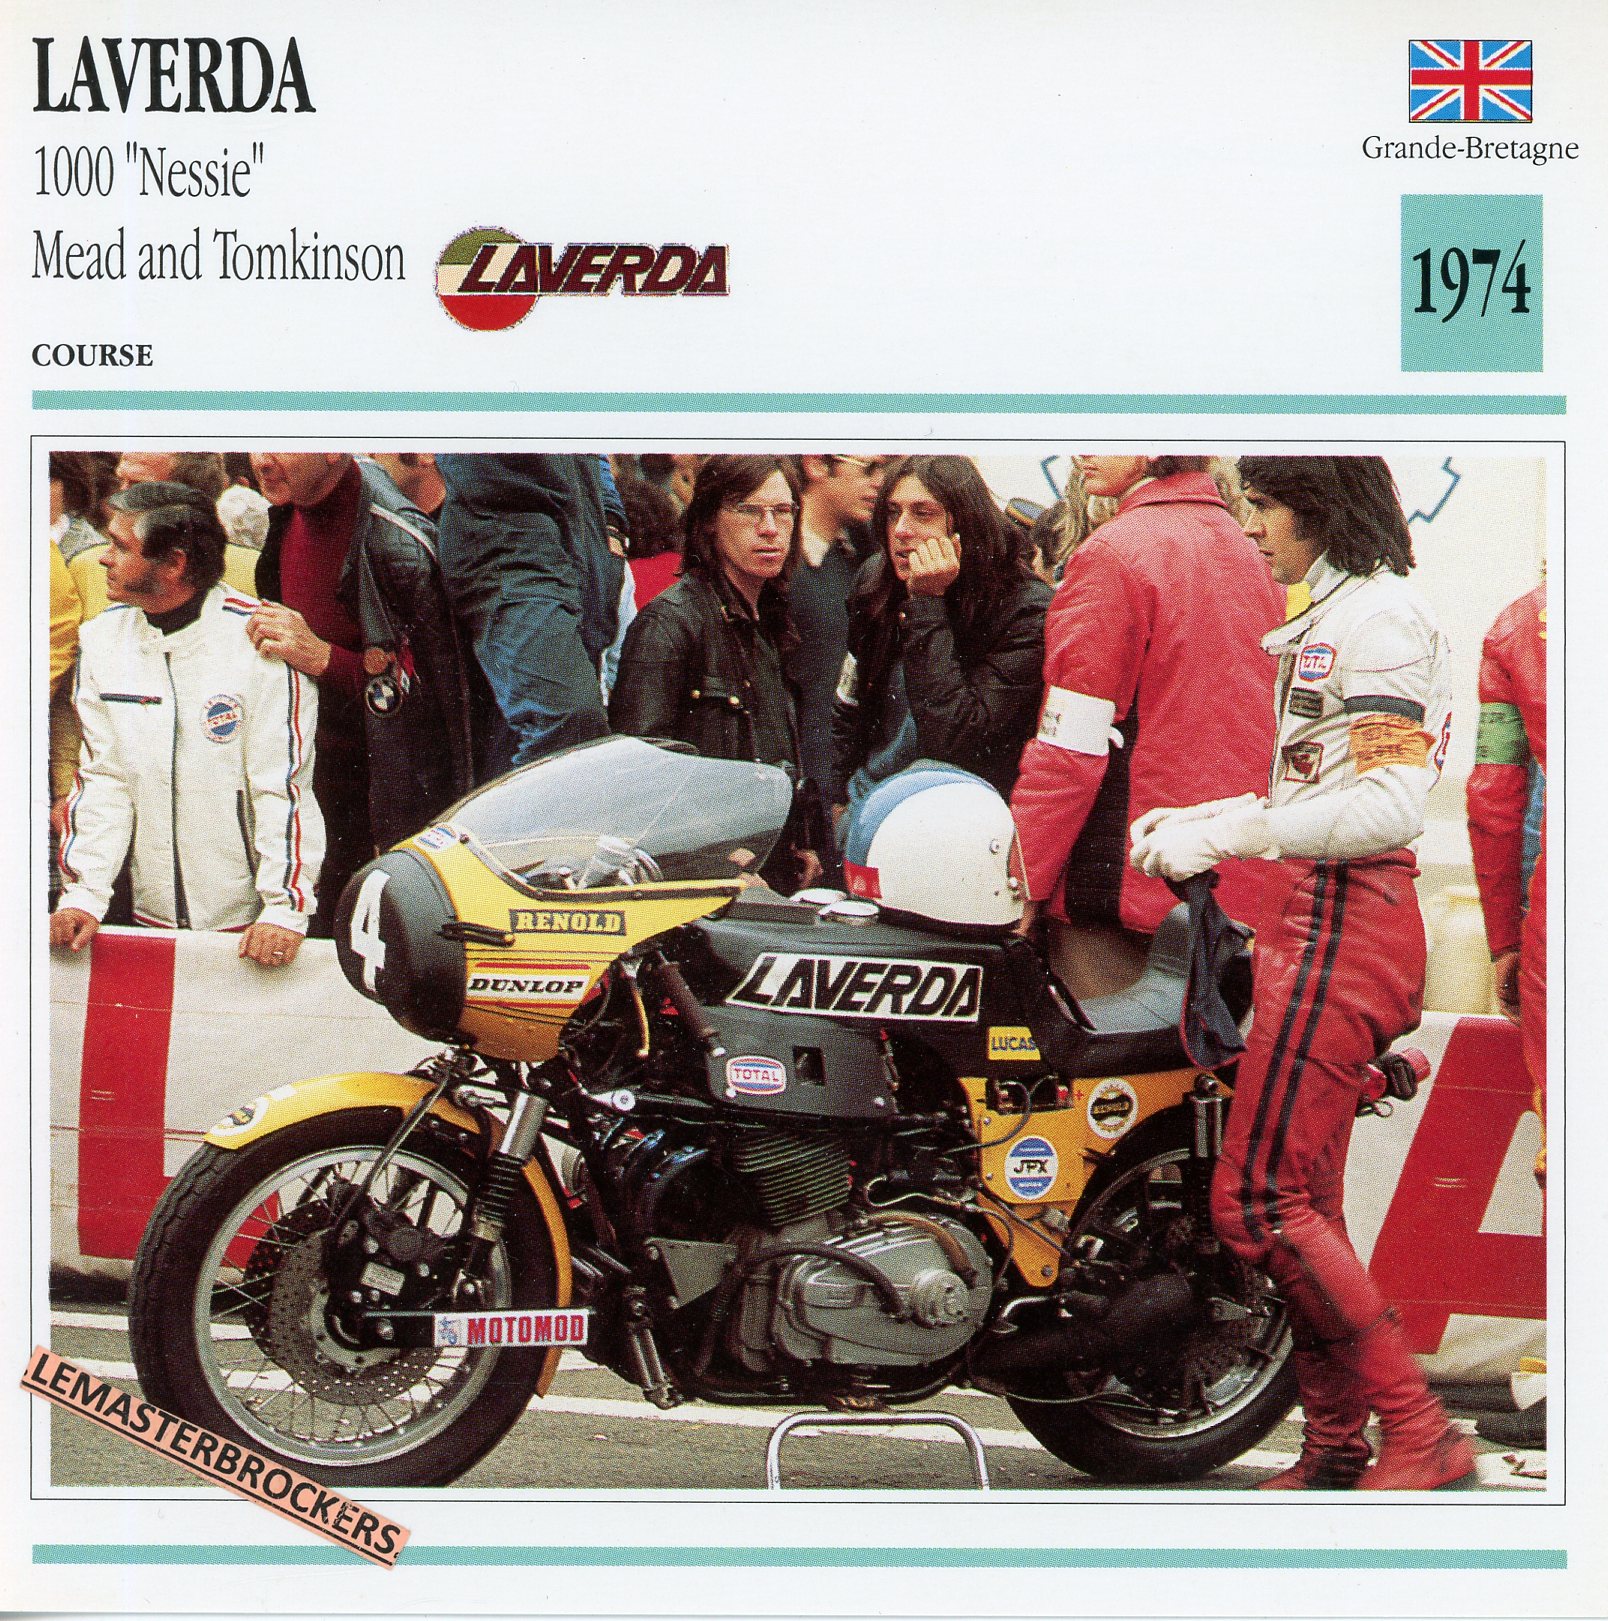 LAVERDA-1000-NESSIE-MEAD-AND-TOMKINSON-1974-LEMASTERBROCKERS-FICHE-MOTO-ATLAS-CARD